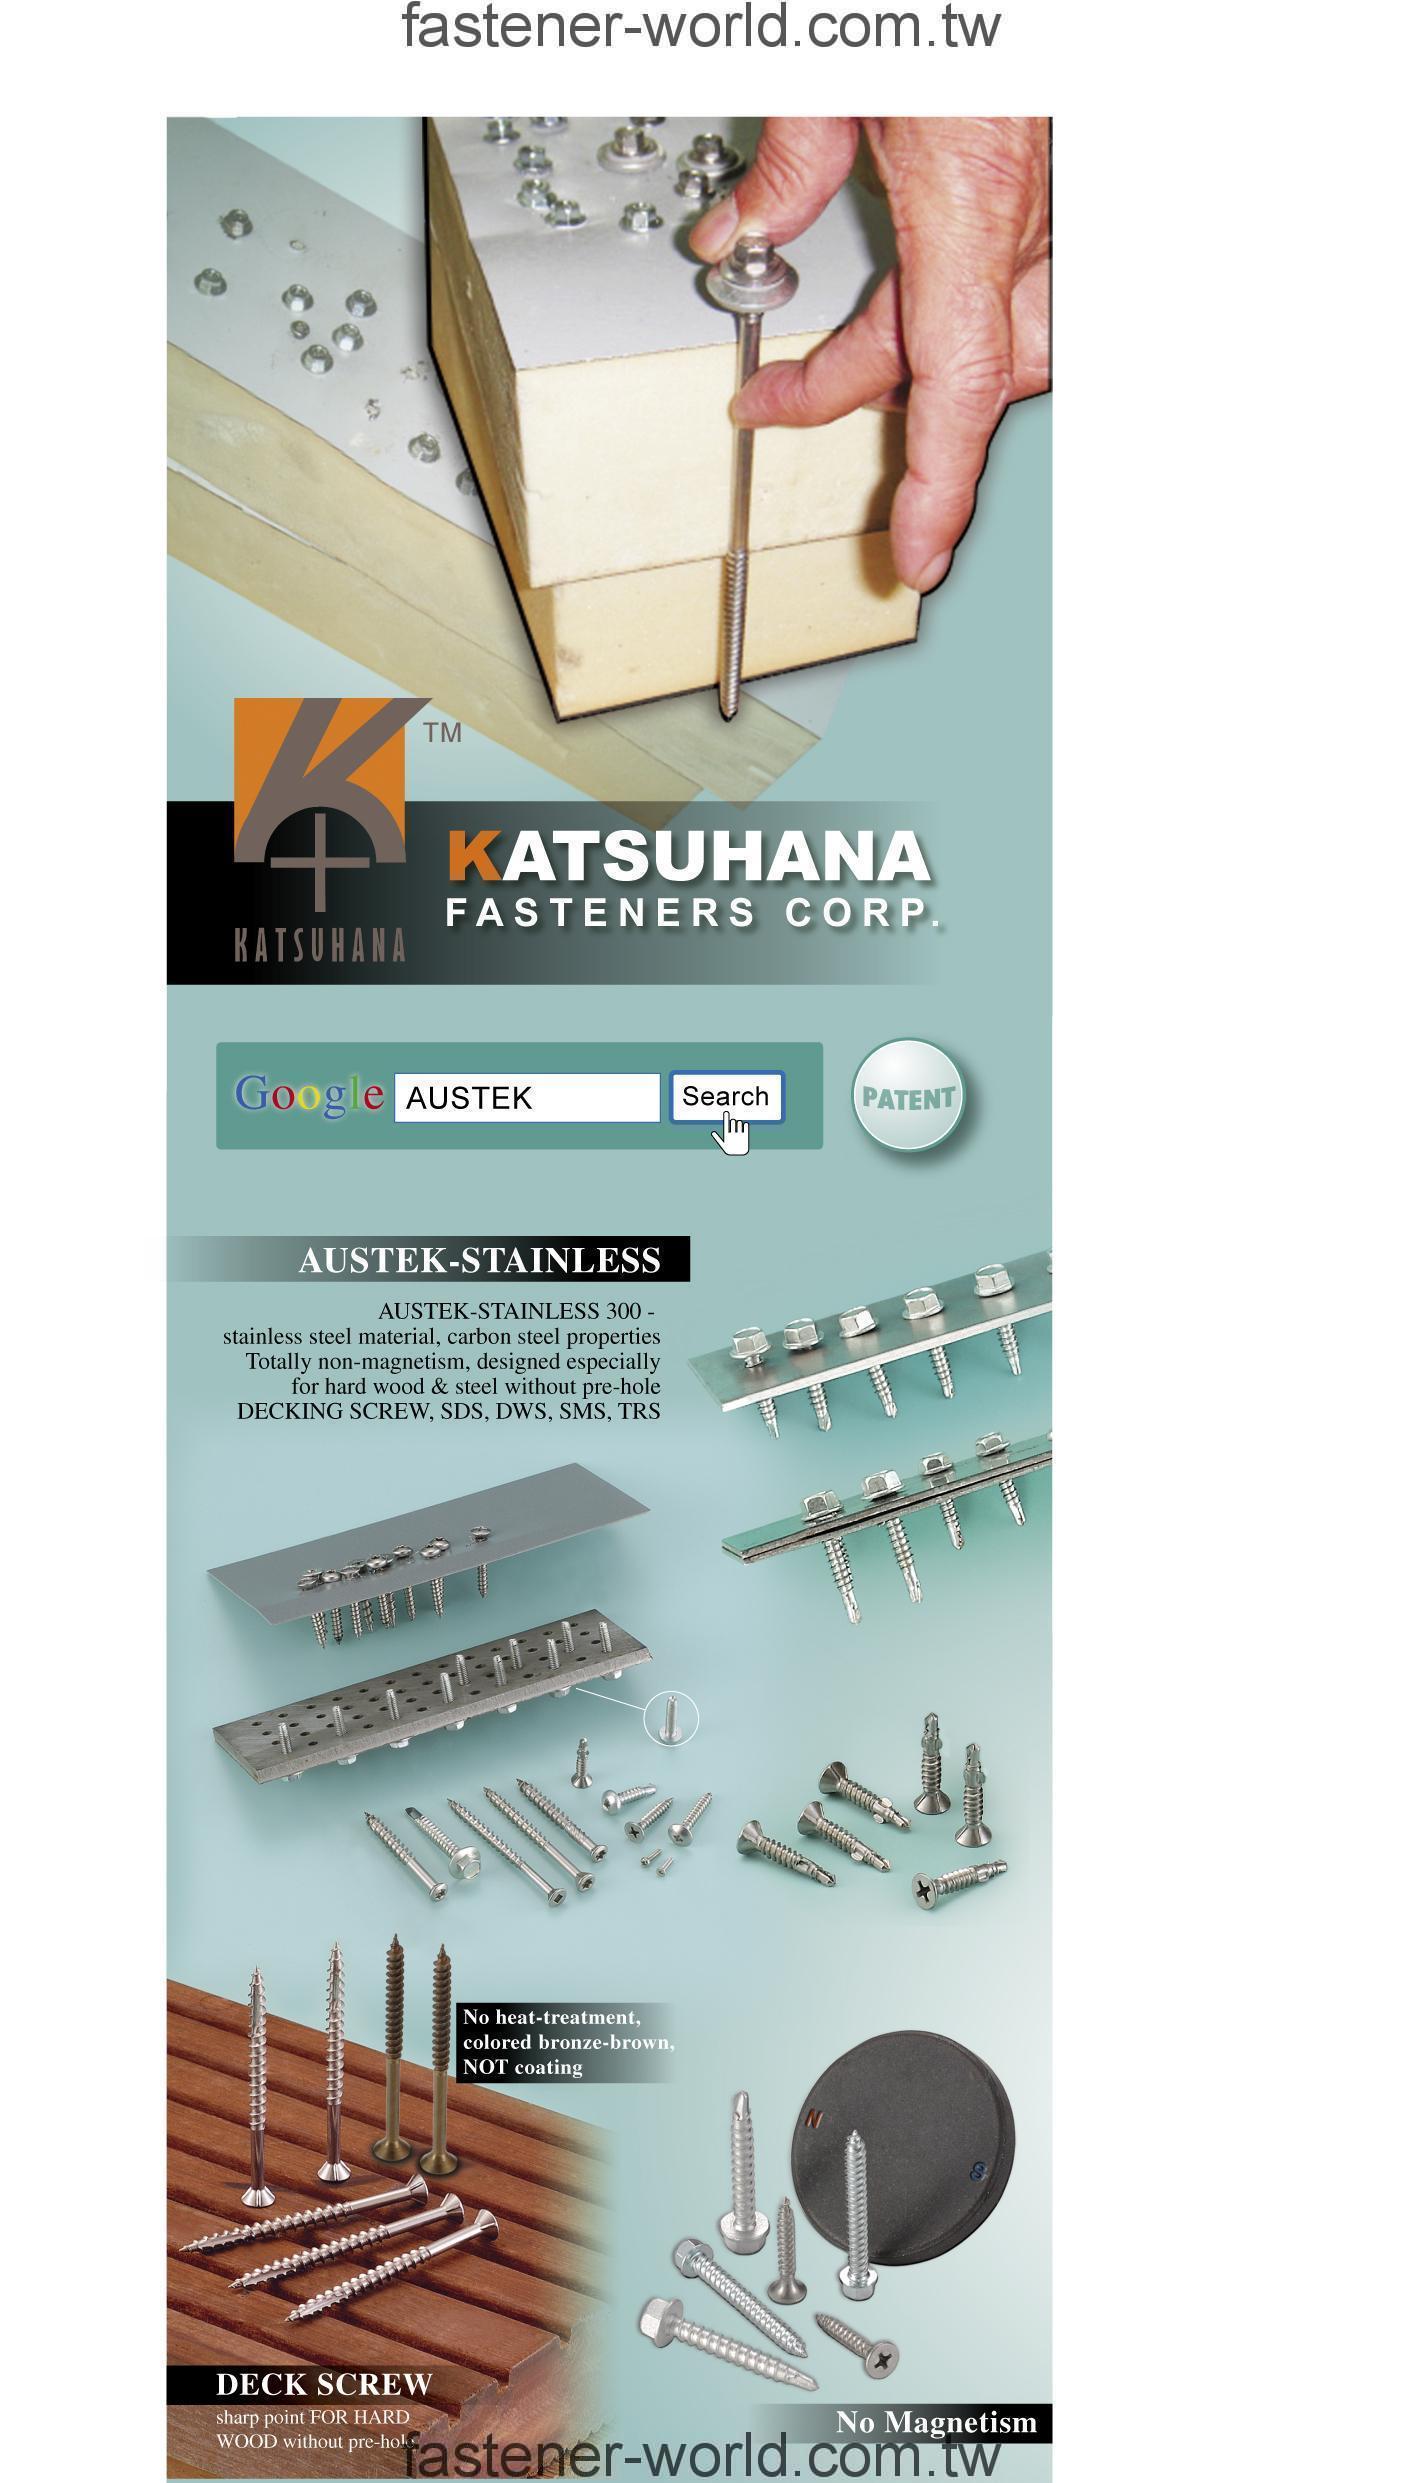 KATSUHANA FASTENERS CORP. _Online Catalogues